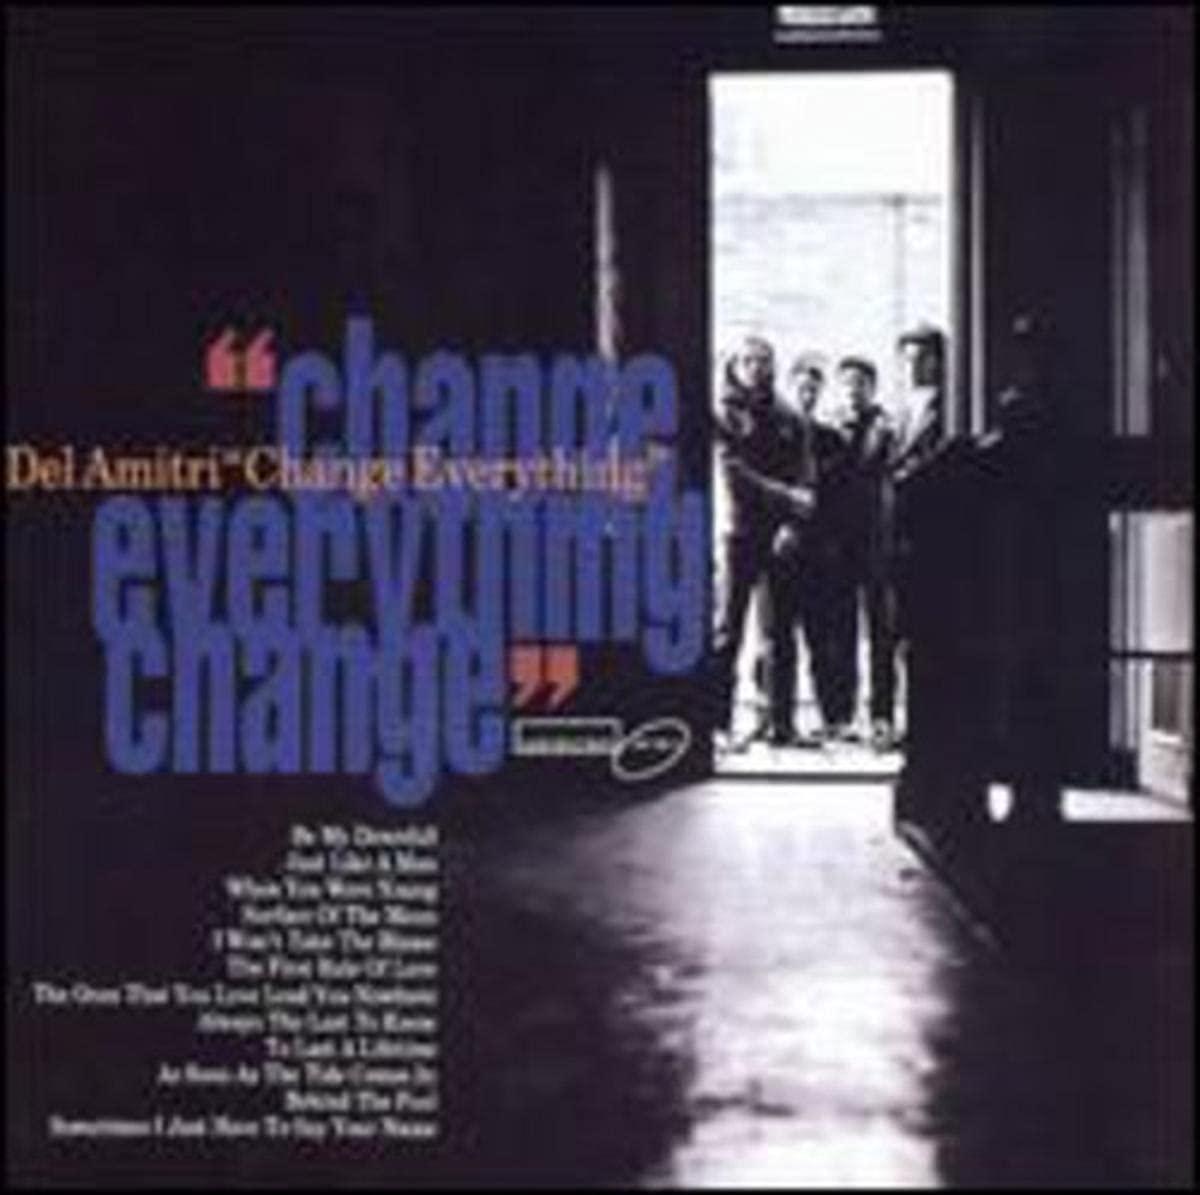 Del Amitri- Change Everything - Darkside Records